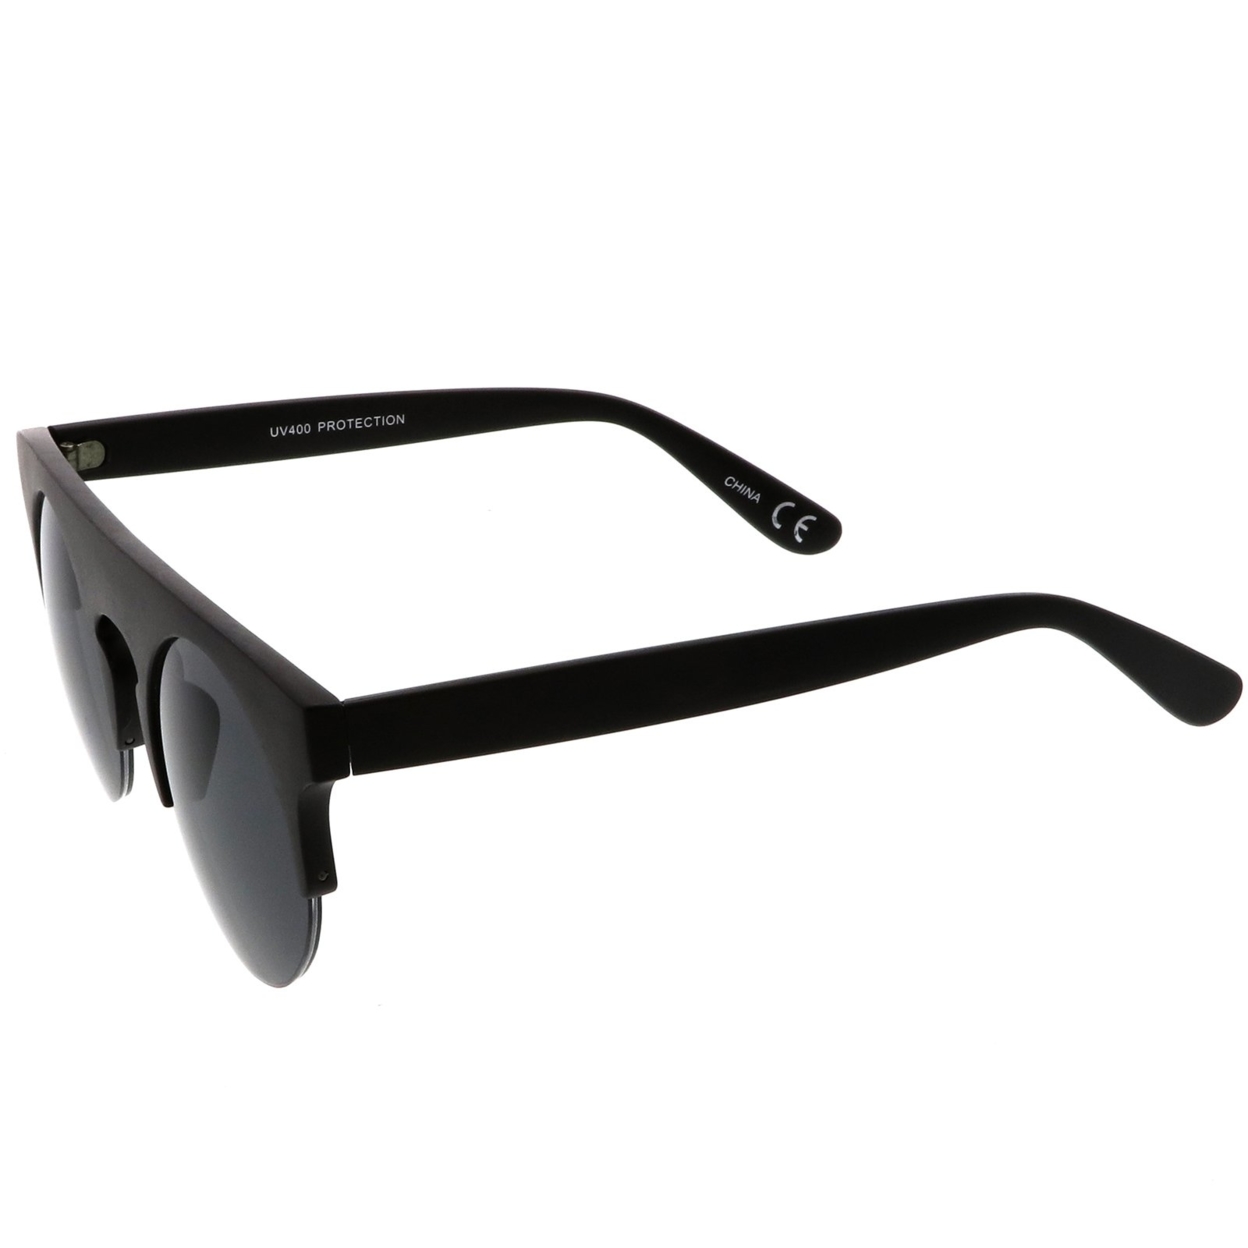 Modern Flat Top Horn Rimmed Round Flat Lens Semi Rimless Sunglasses 48mm - Black / Yellow Mirror